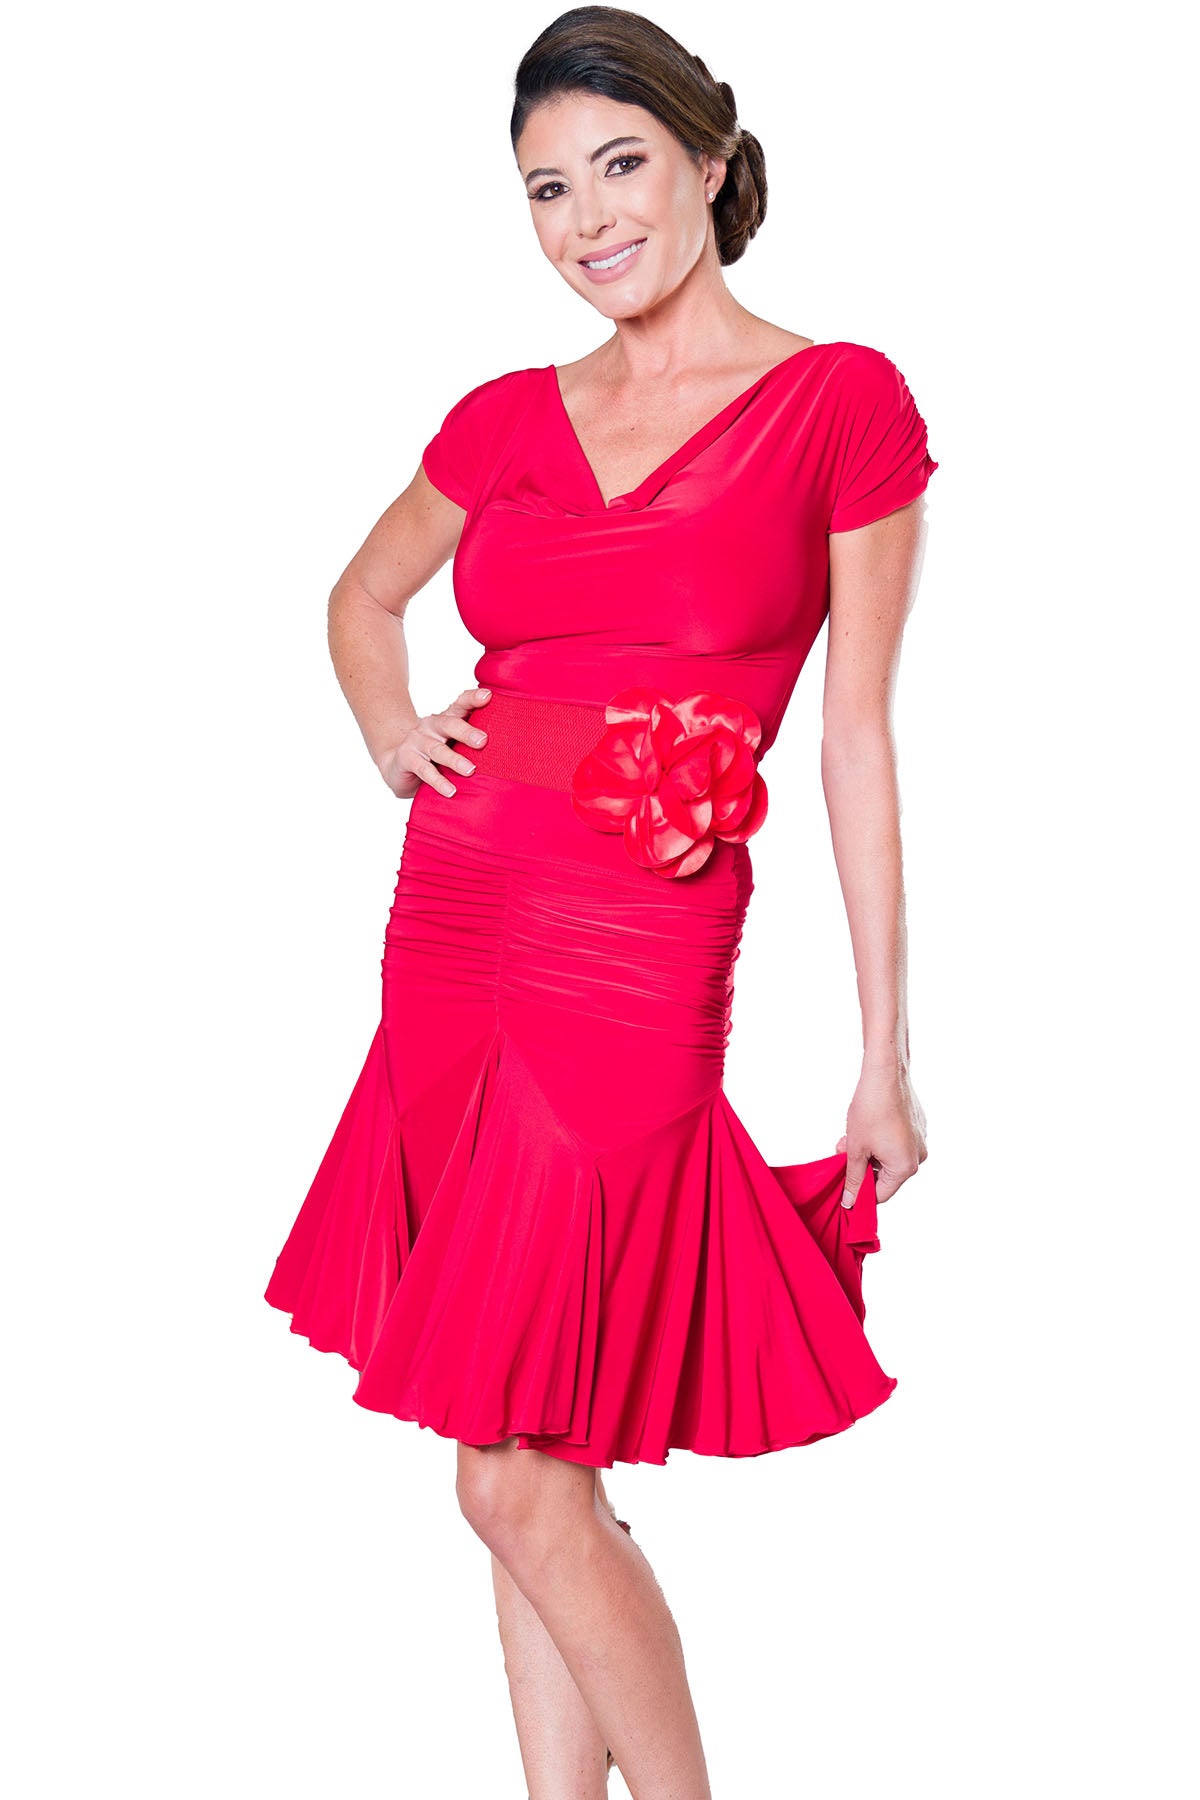 Women's red Latin dancing skirt